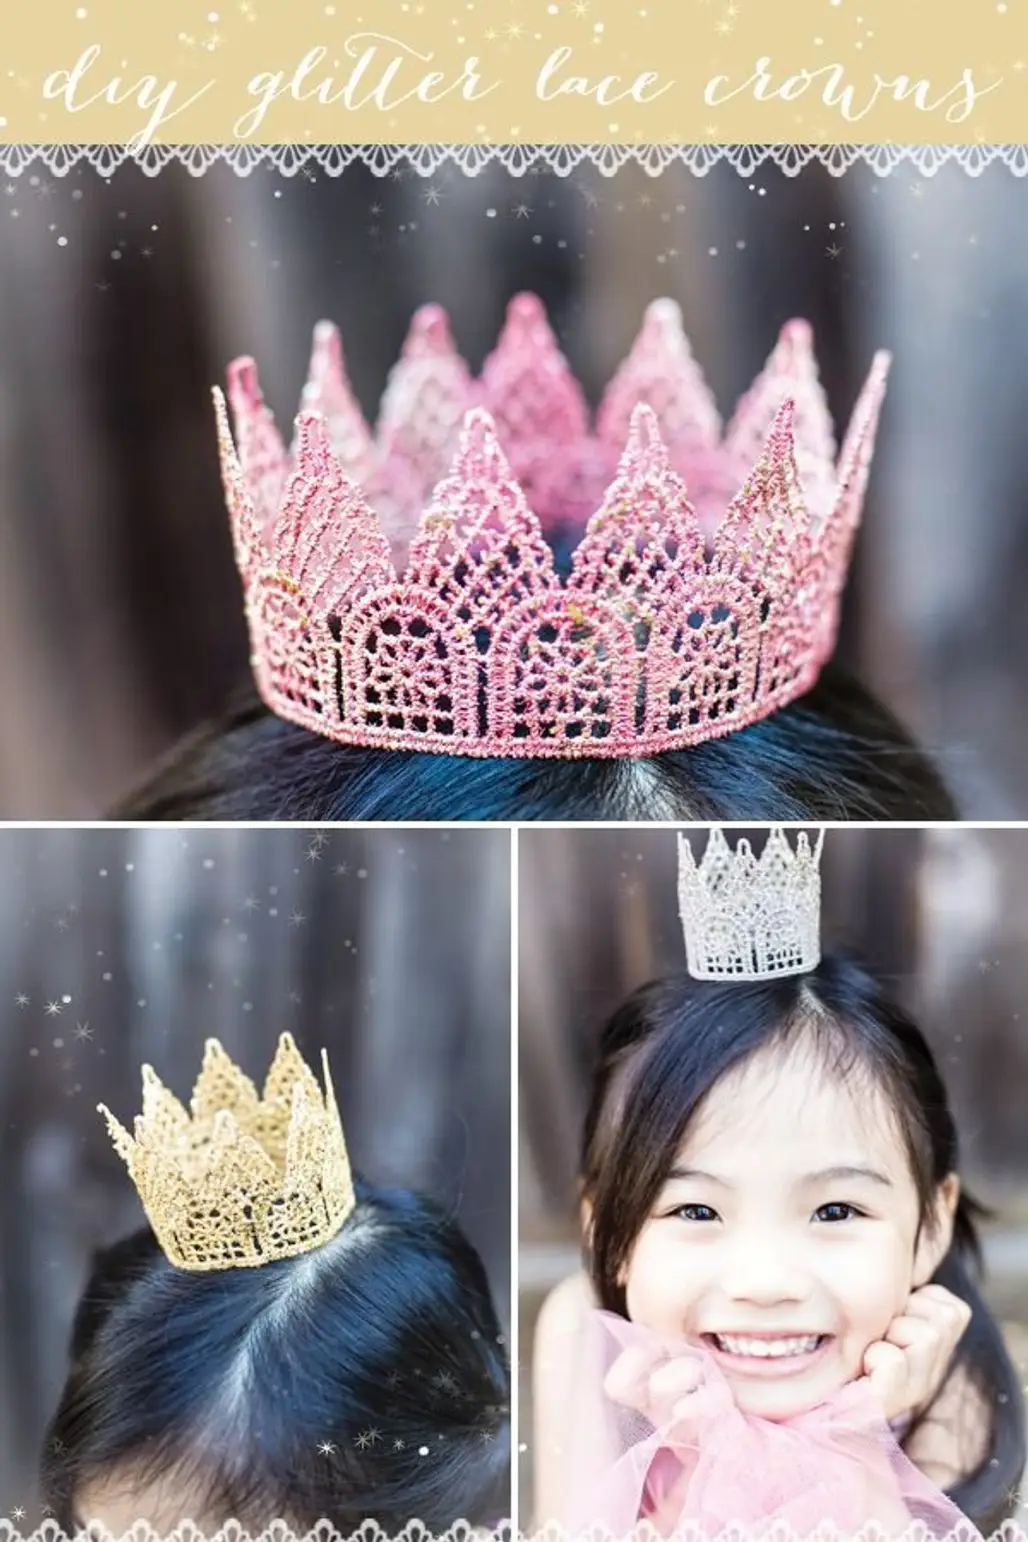 Glitter Lace Crown